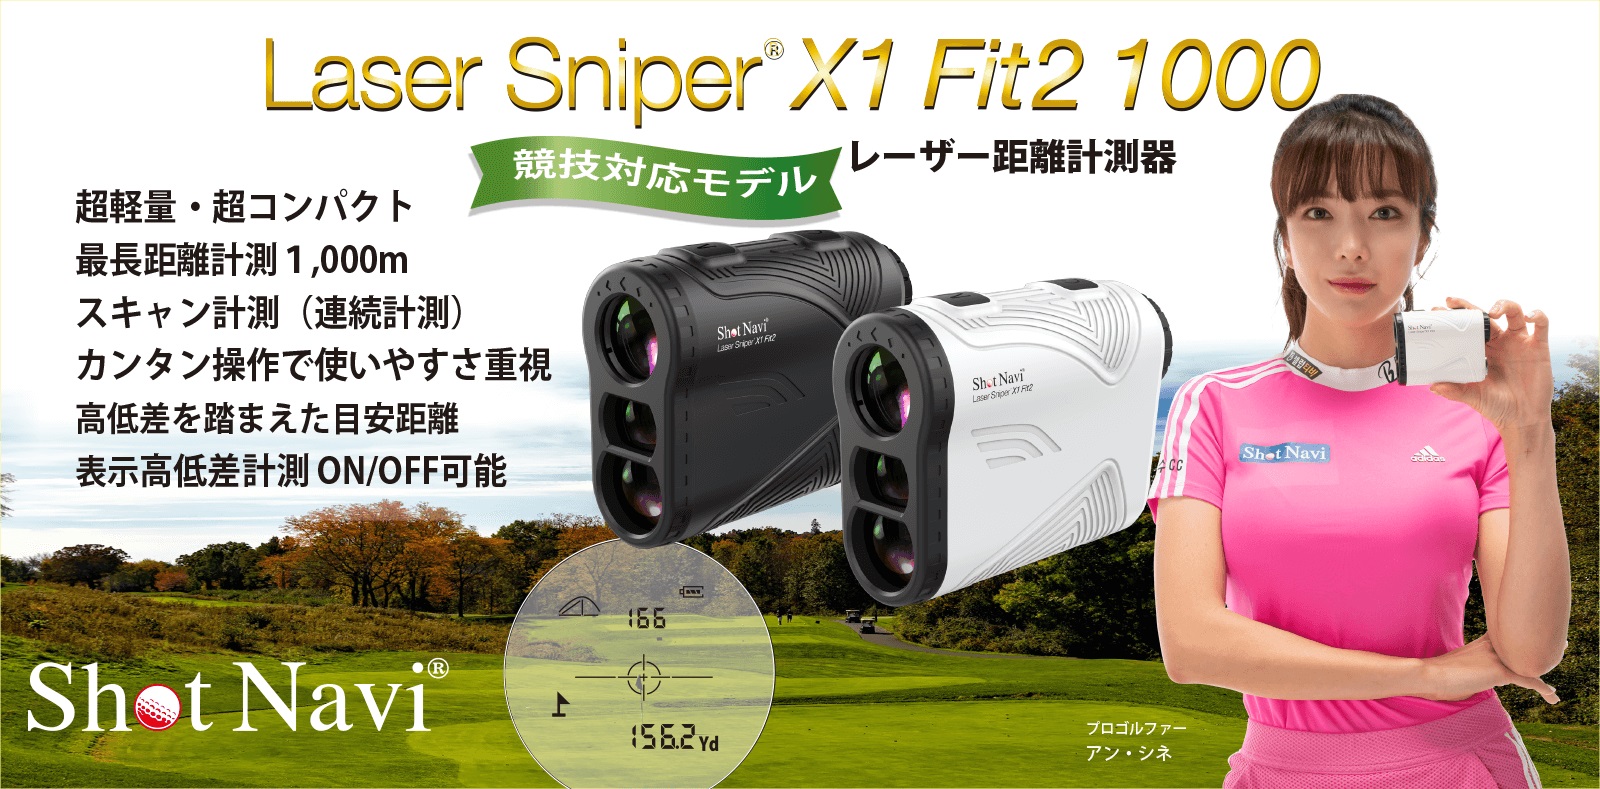 ShotNavi ショットナビ Laser Sniper X1 Fit2 1000 レーザースナイパー X1 フィット2 レーザー距離計